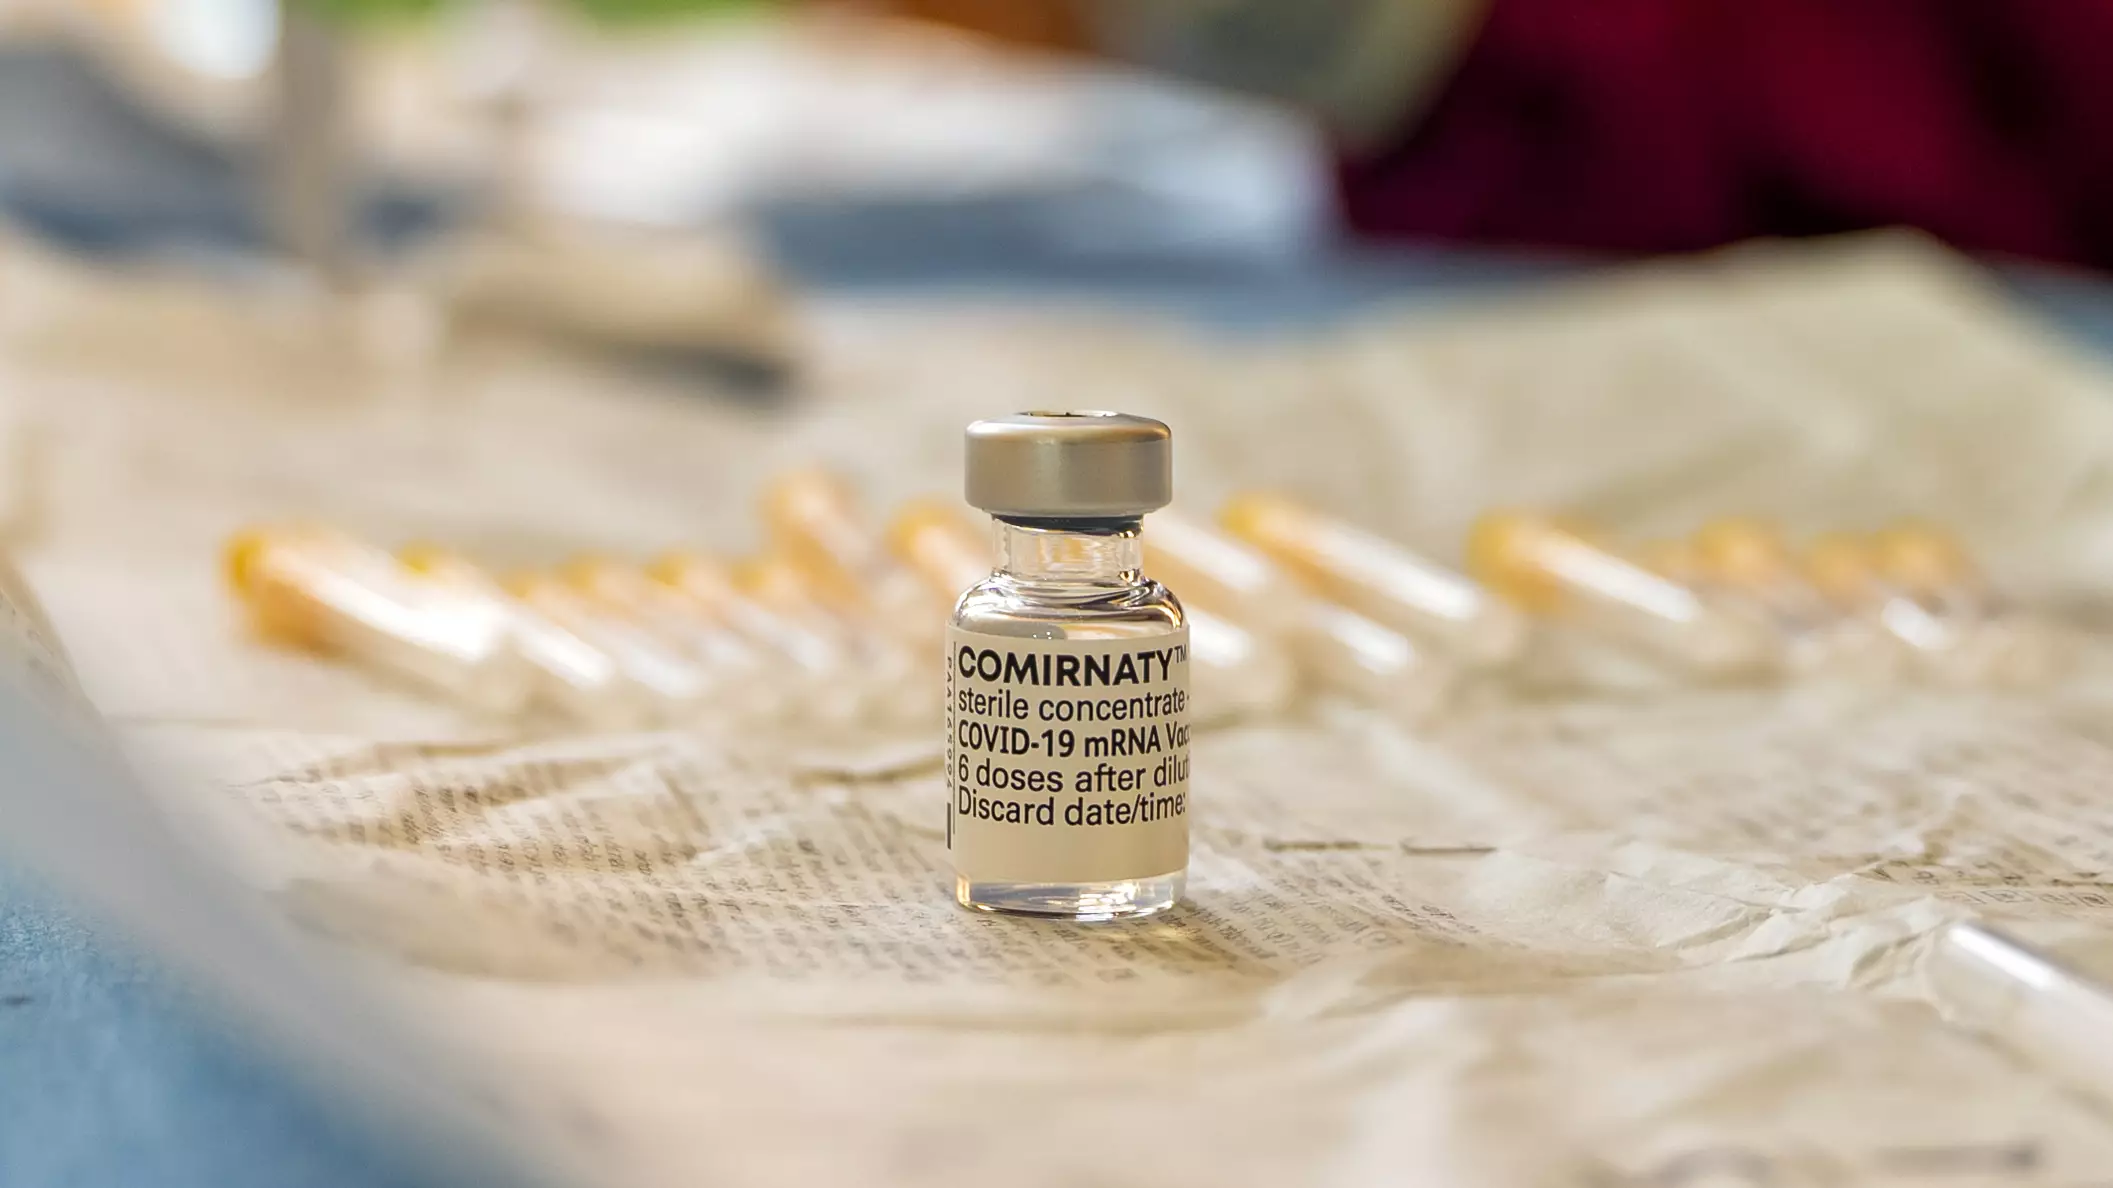 Woman Accidentally Given Six Doses Of Coronavirus Vaccine